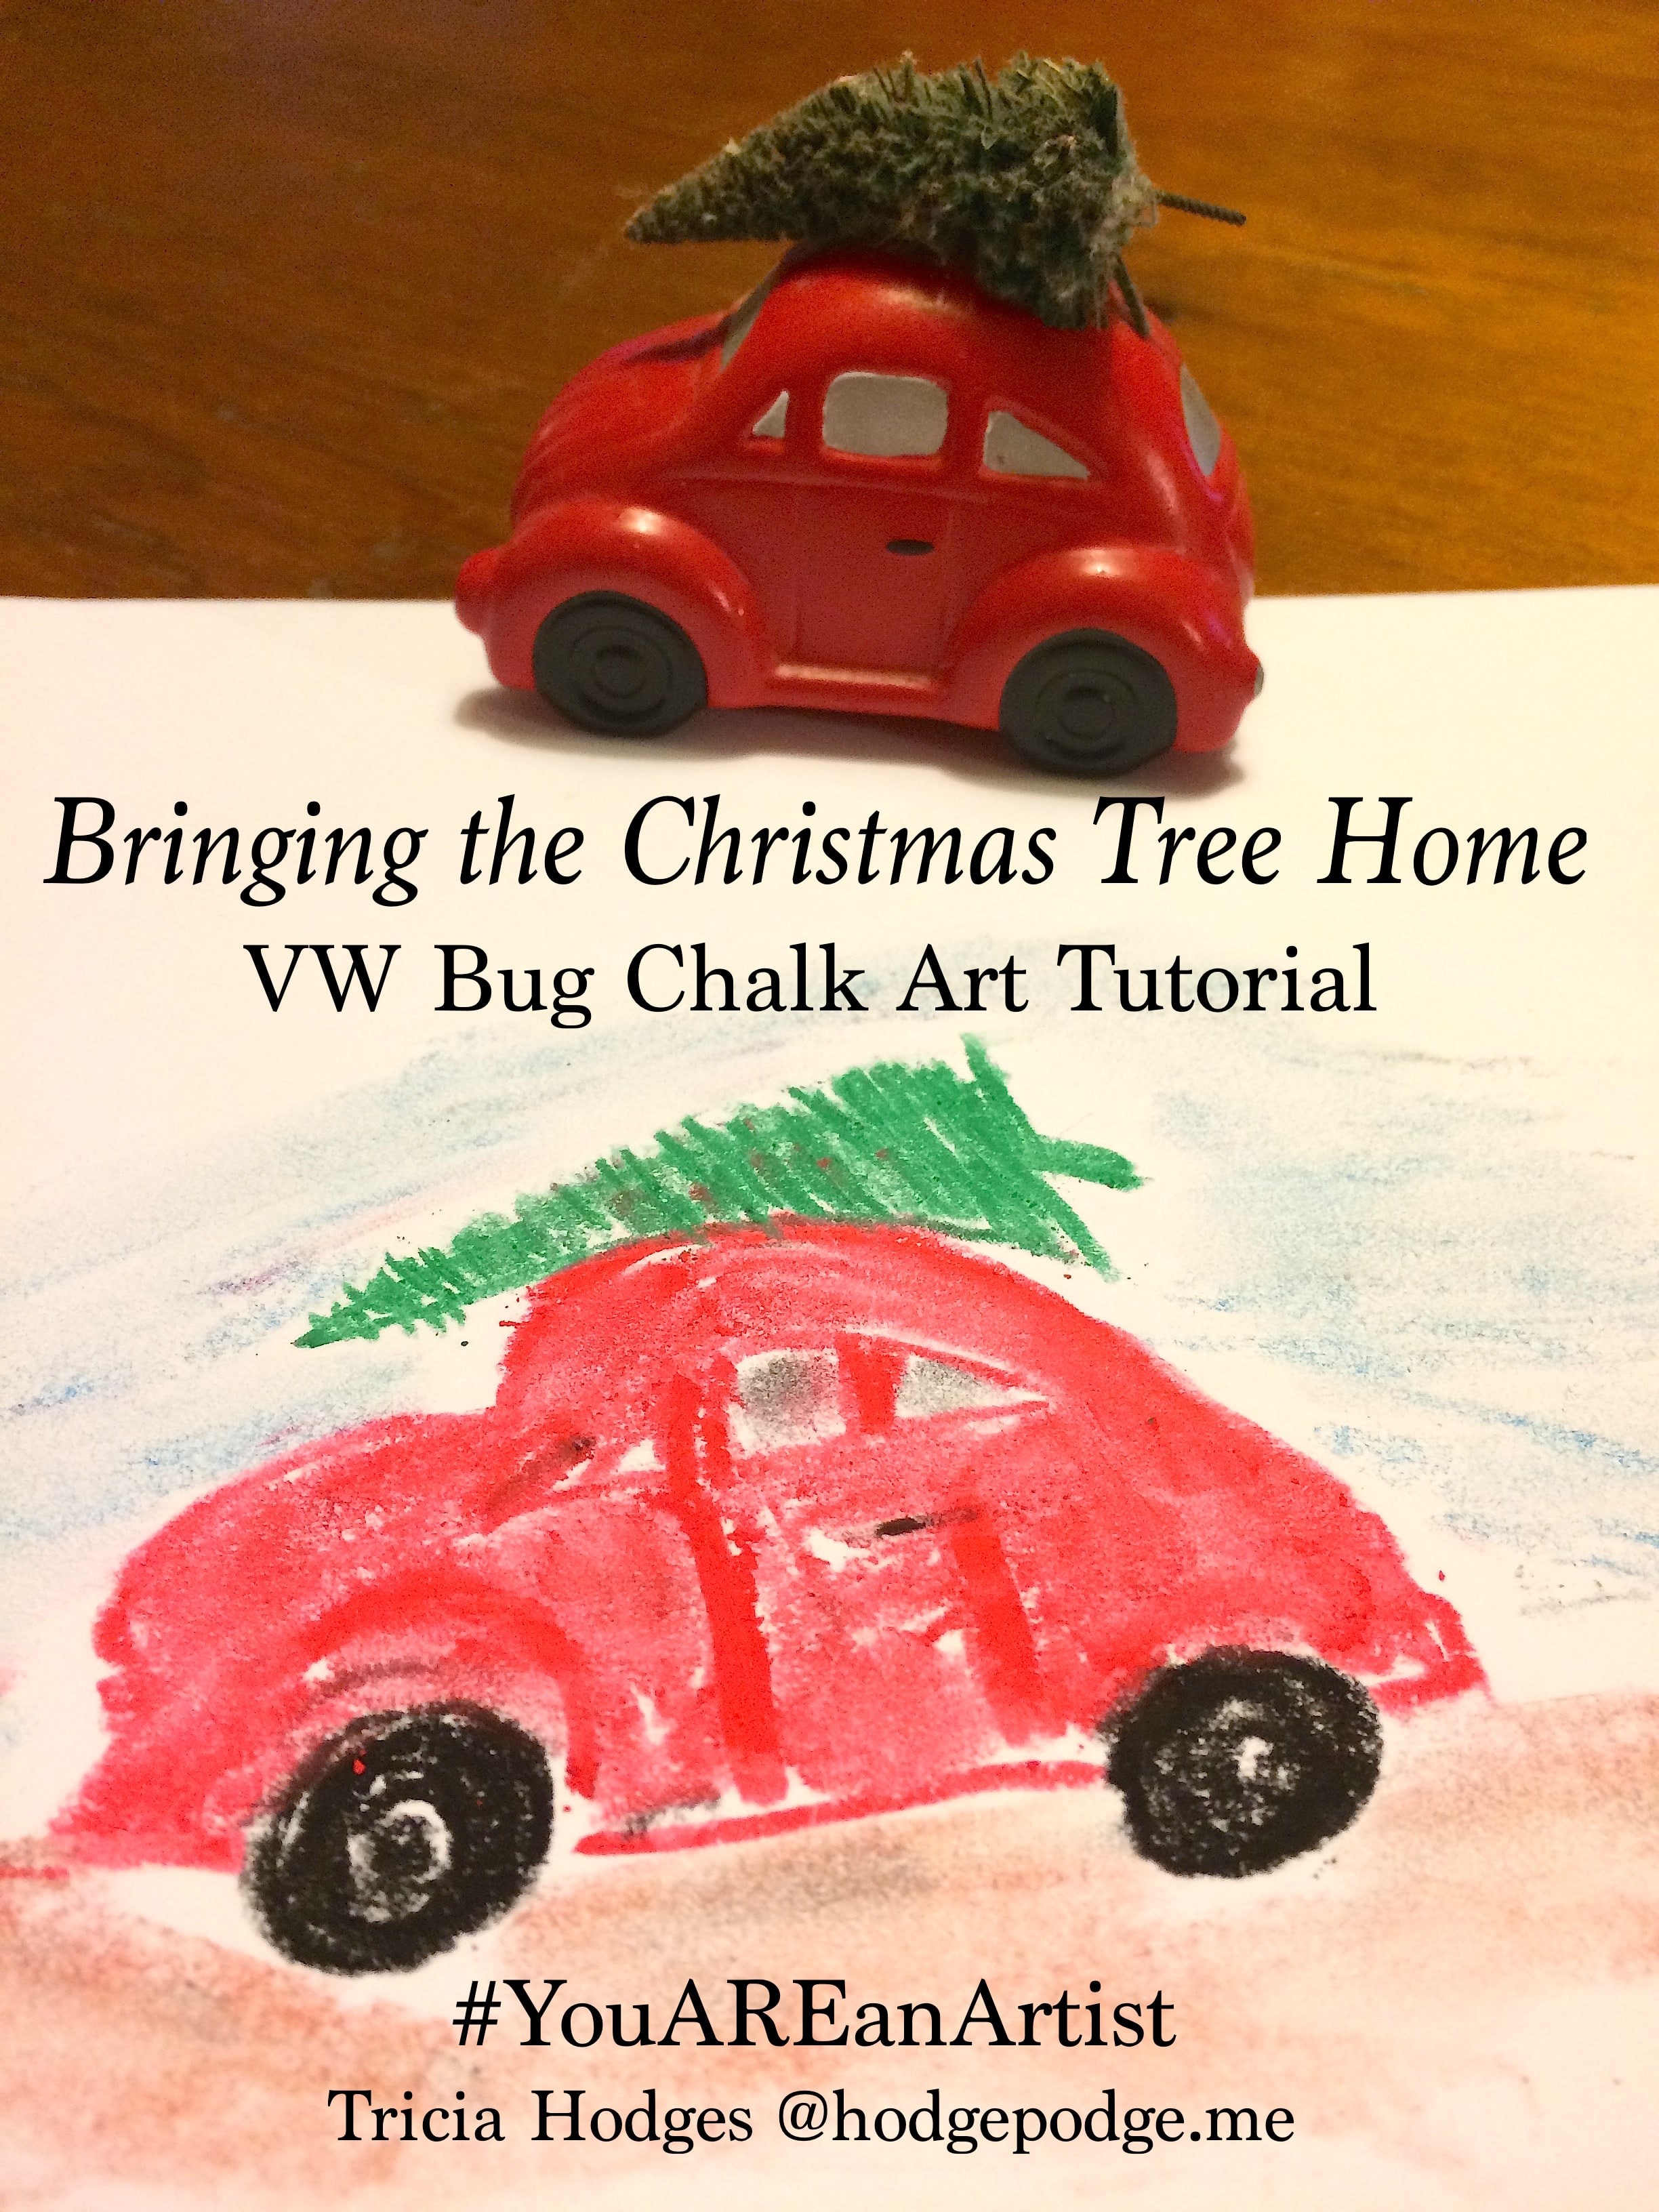 VW Bug Chalk Art Tutorial